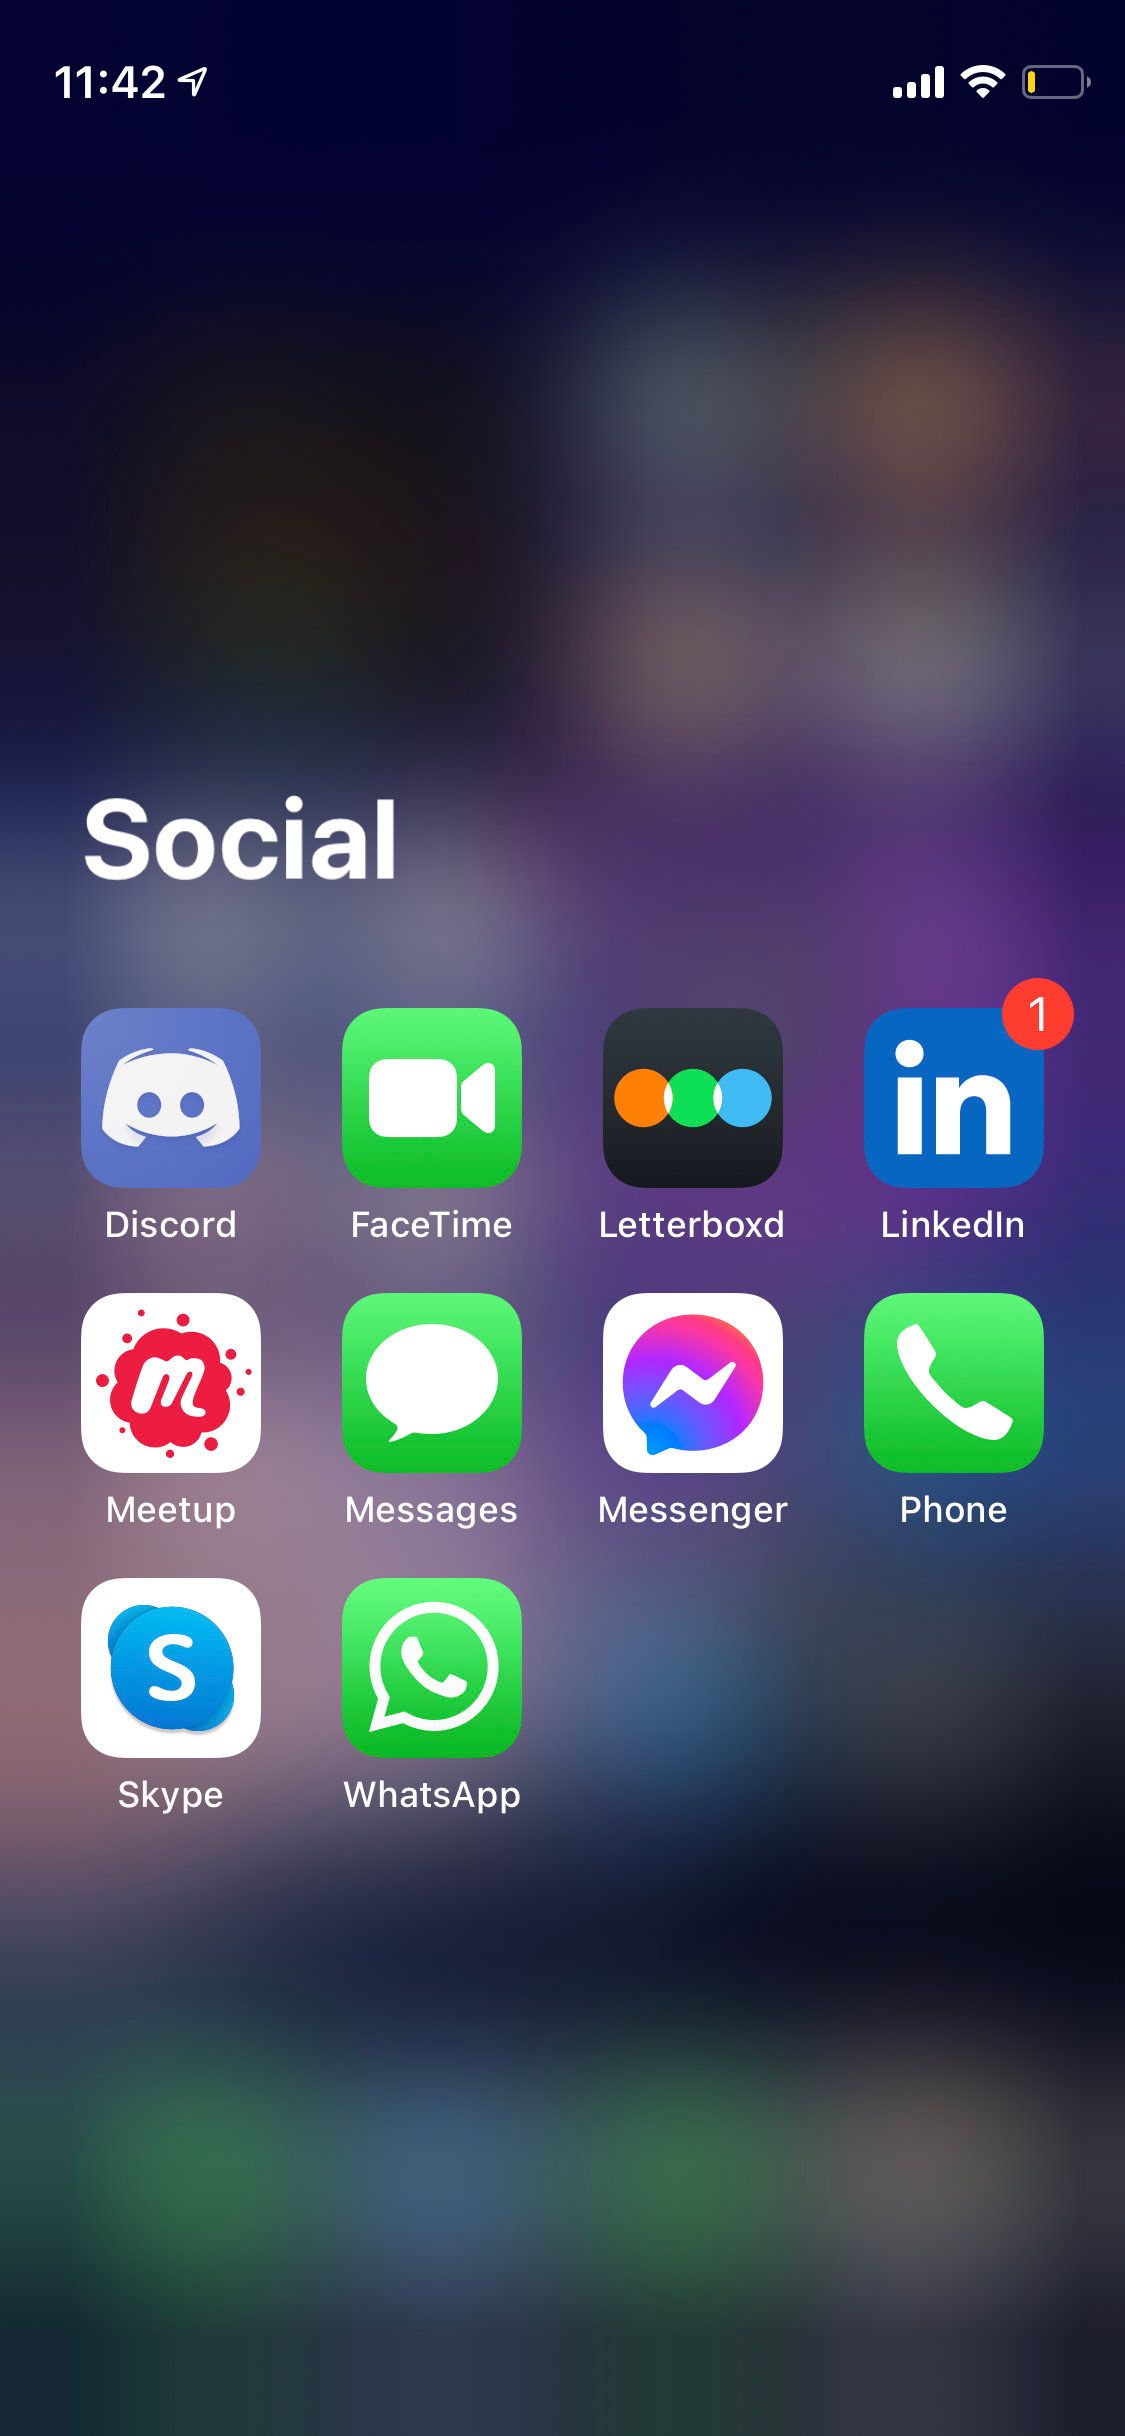 Social folder in iPhone App Library3